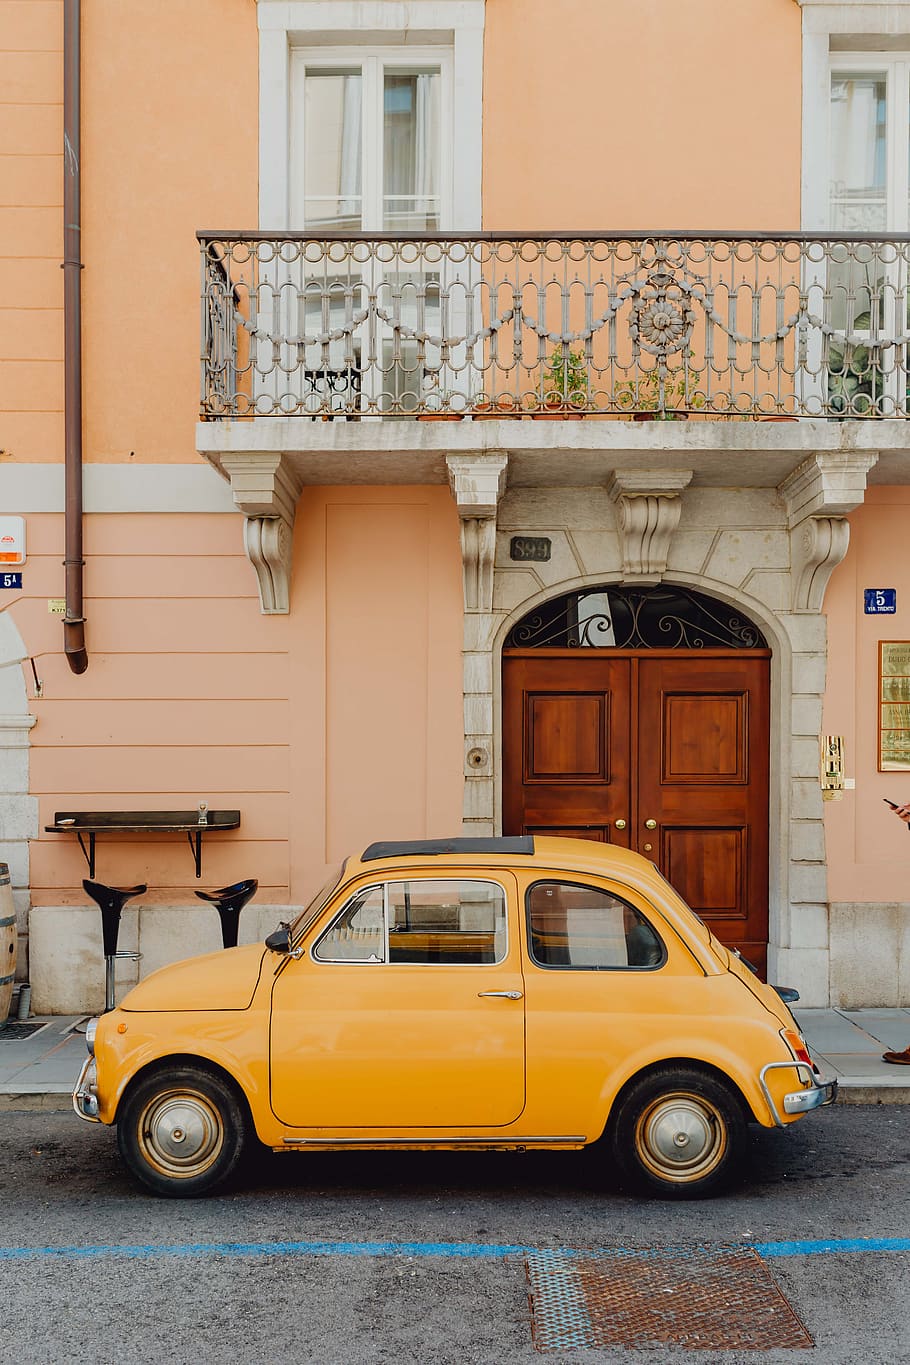 500, tua, vintage, Italia, Eropa, kuning, Mobil, transportasi, jalan, balkon